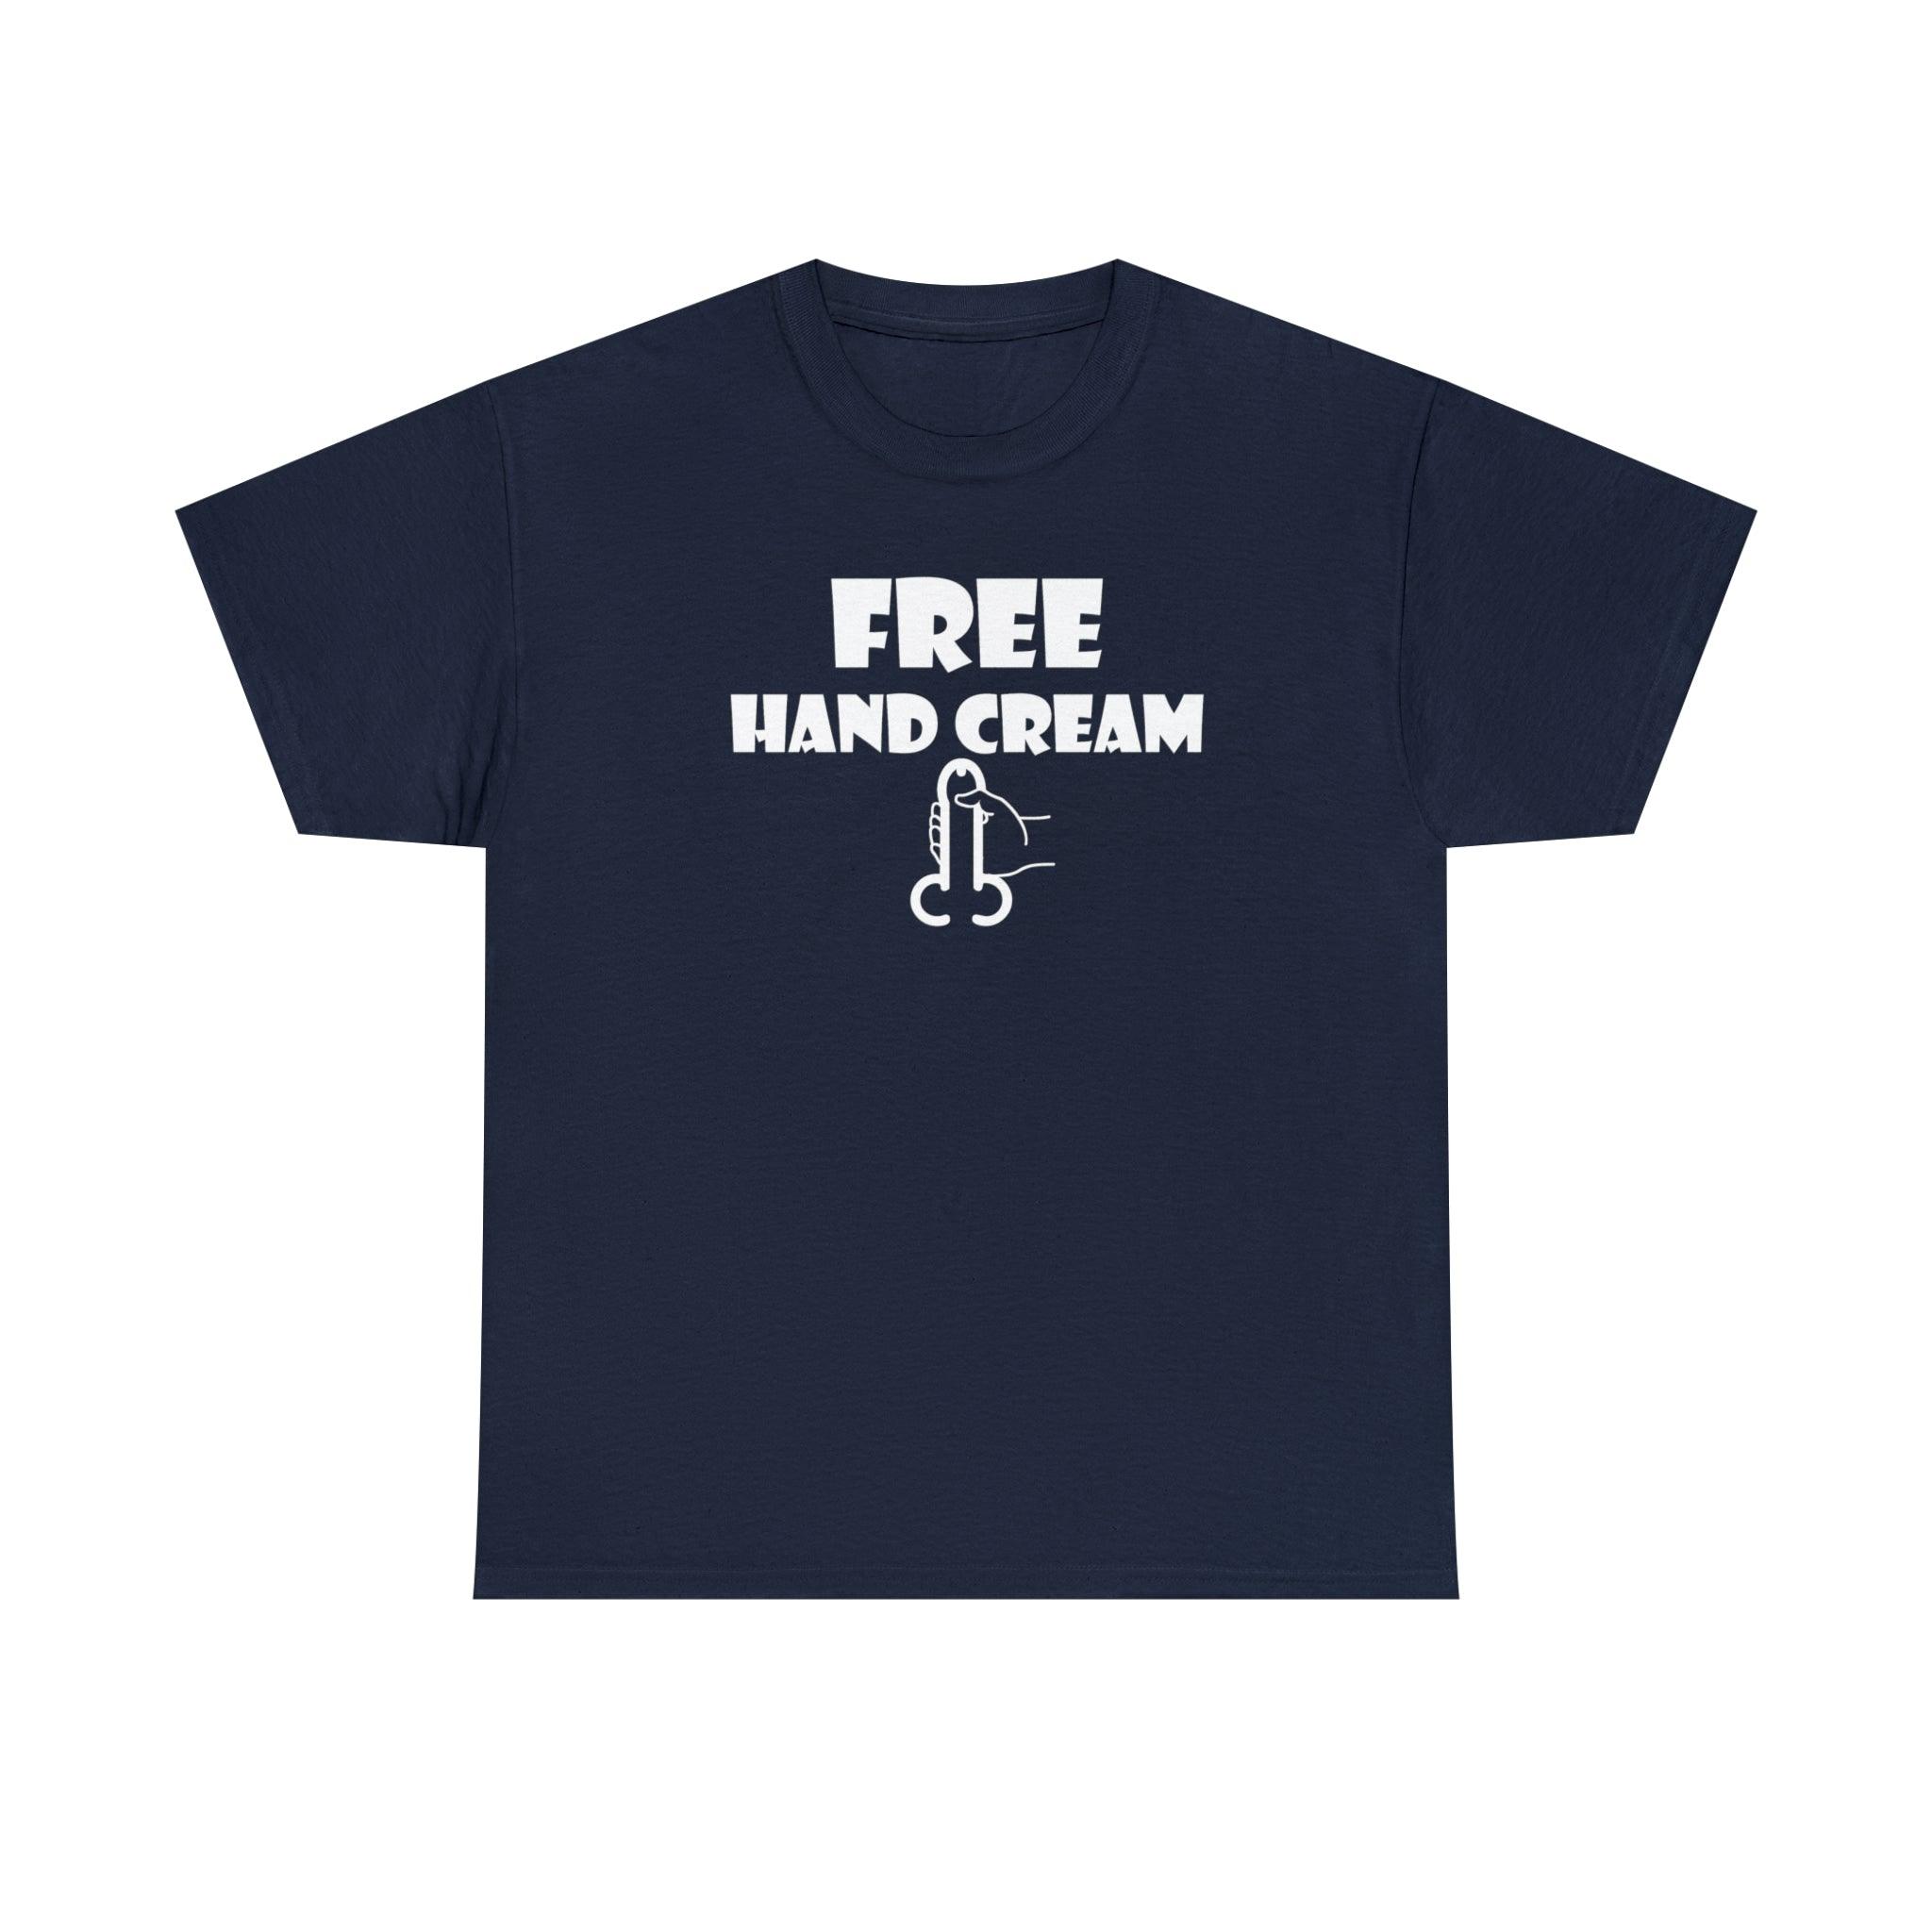 Free Hand Cream funny mens humor t-shirt about masturbation pic pic